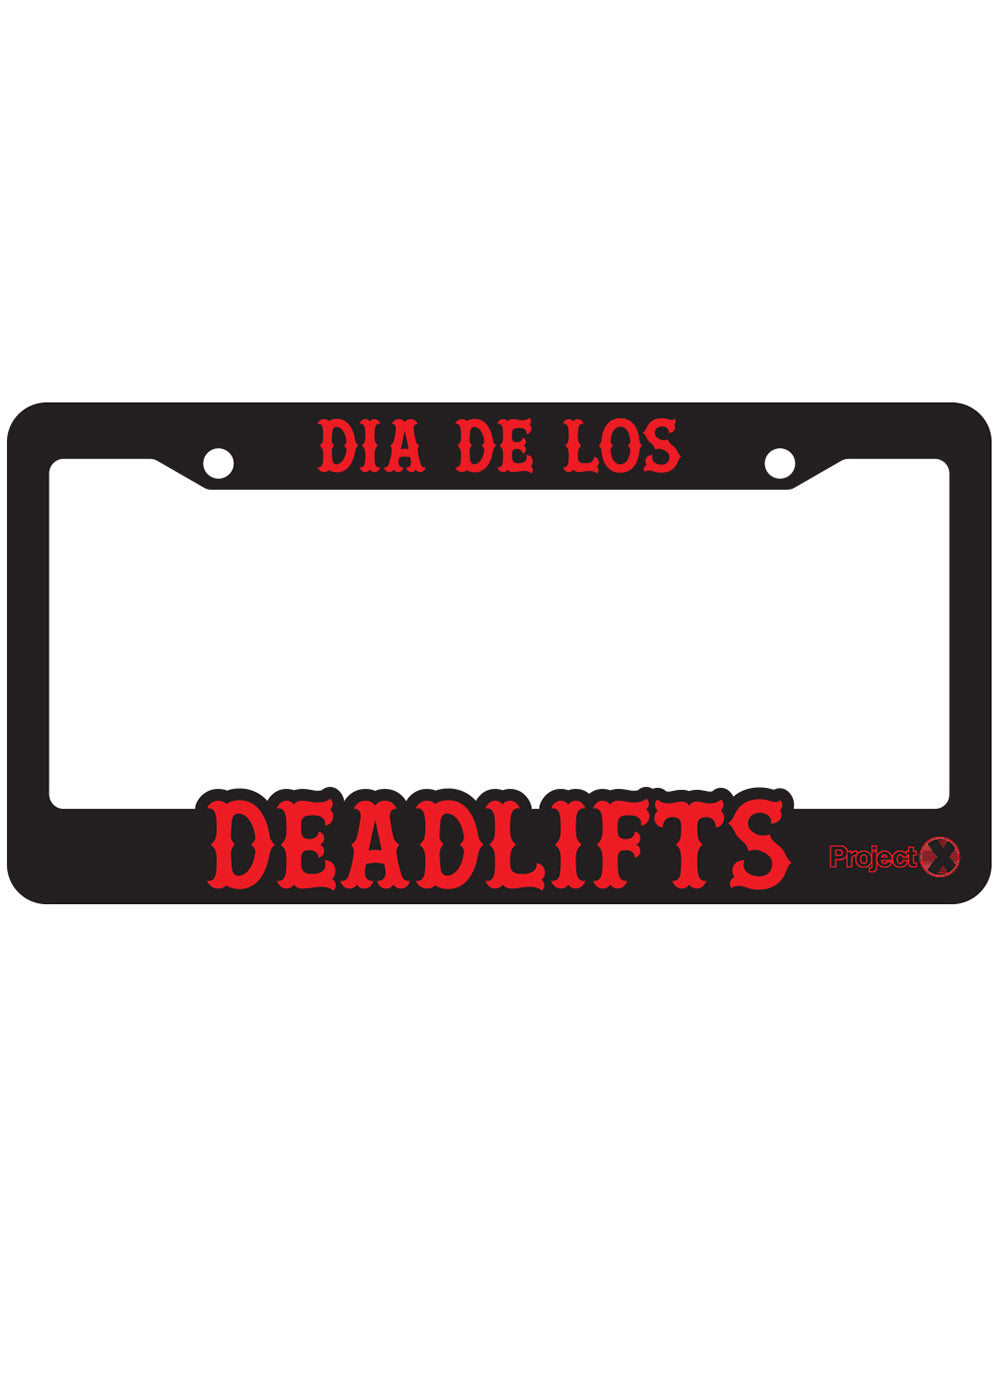 'Dia de los Deadlifts' License Plate Frame